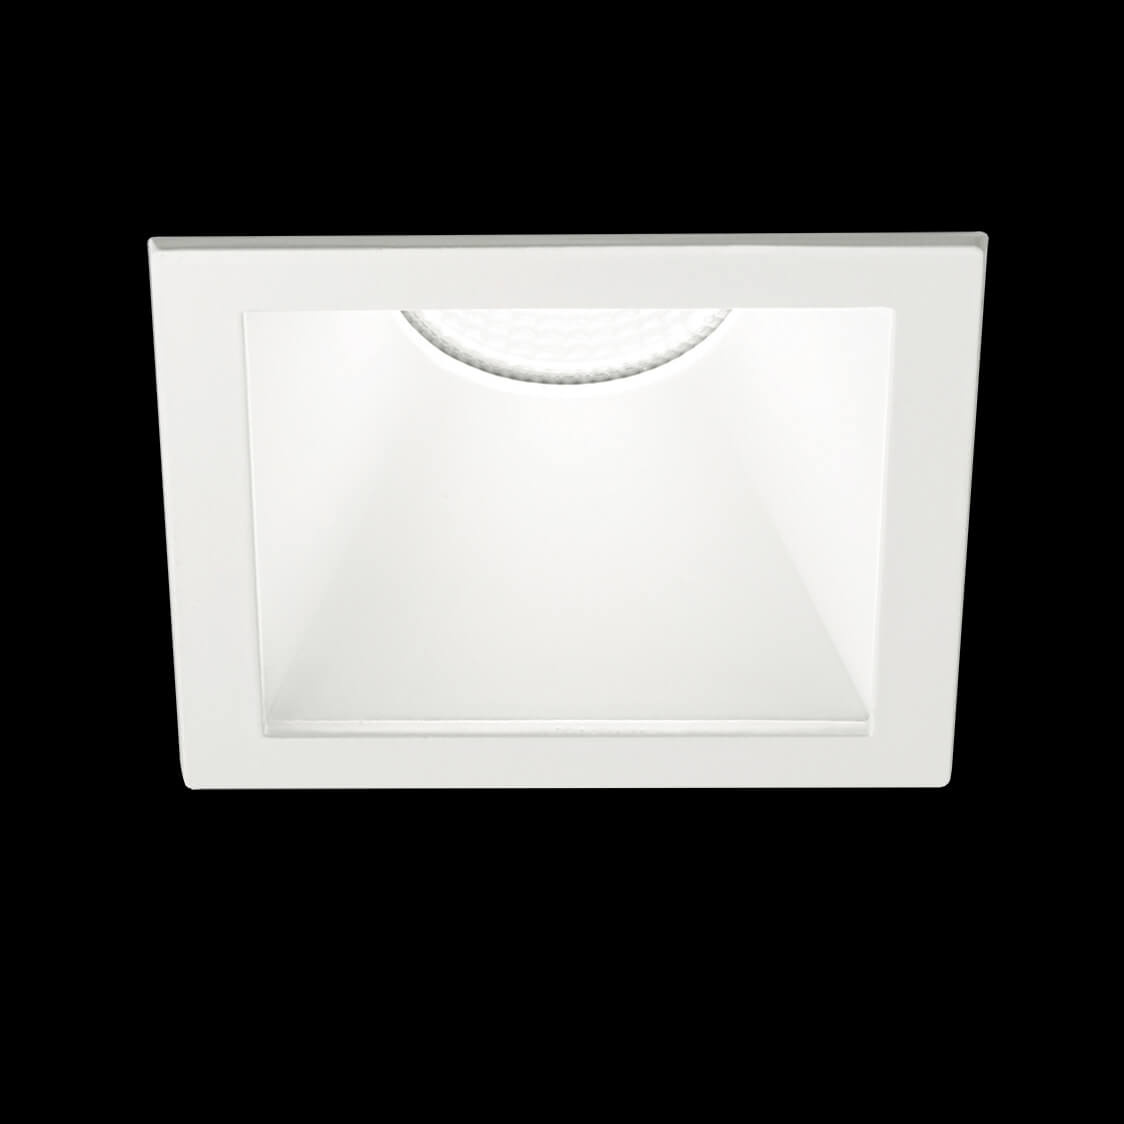 Встраиваемый светодиодный светильник Ideal Lux Game Square White White 192376